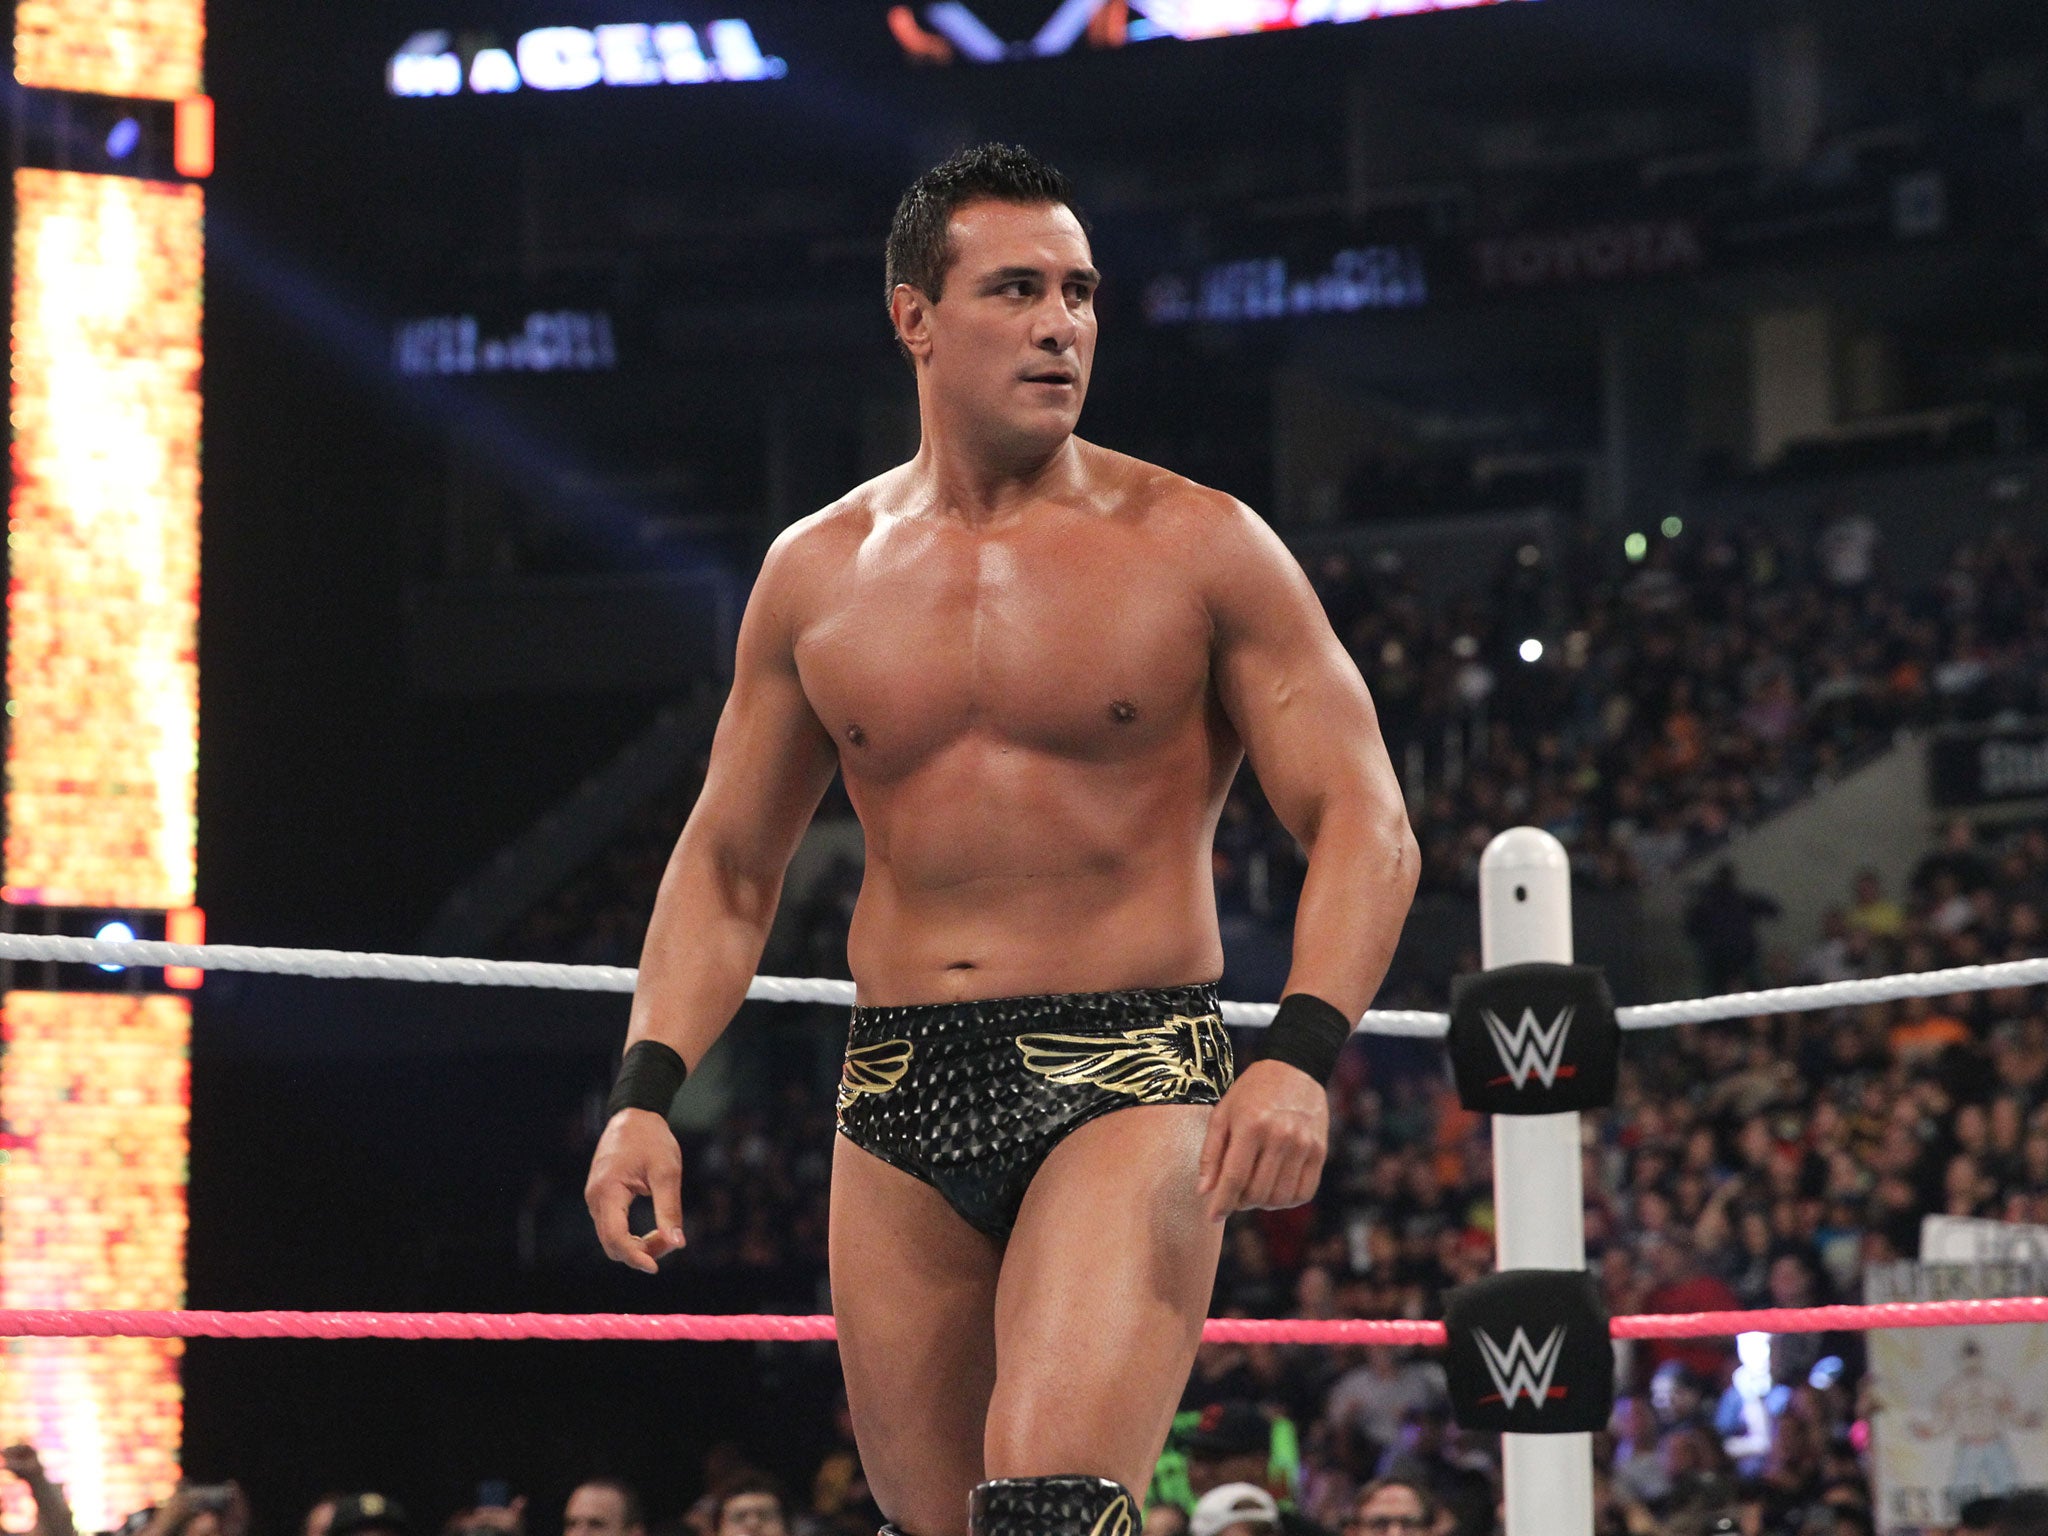 Alberto Del Rio made a shock return to the WWE to defeat John Cena